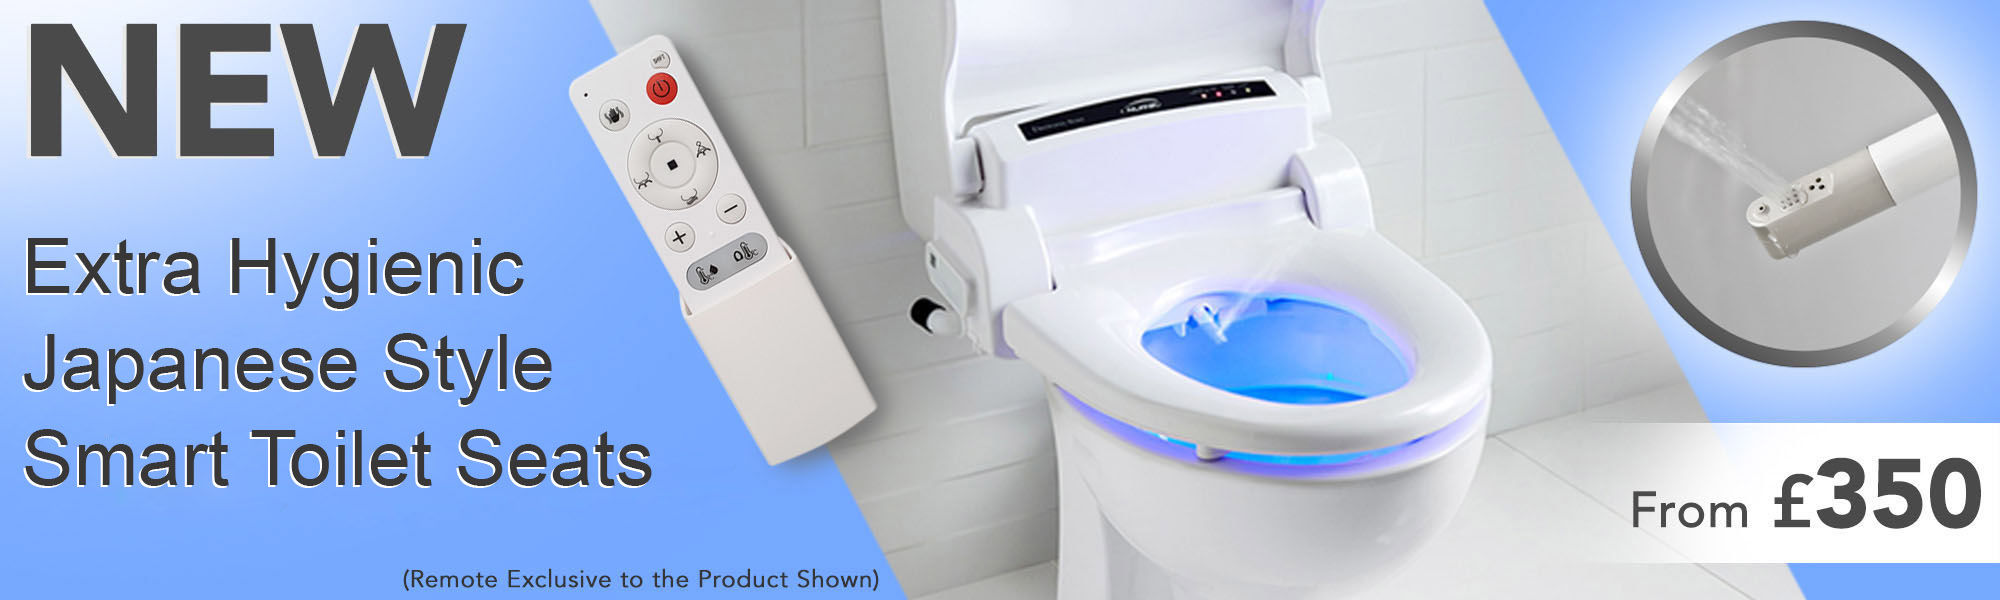 New Extra Hygienic Japanese Style Smart Toilet Seats